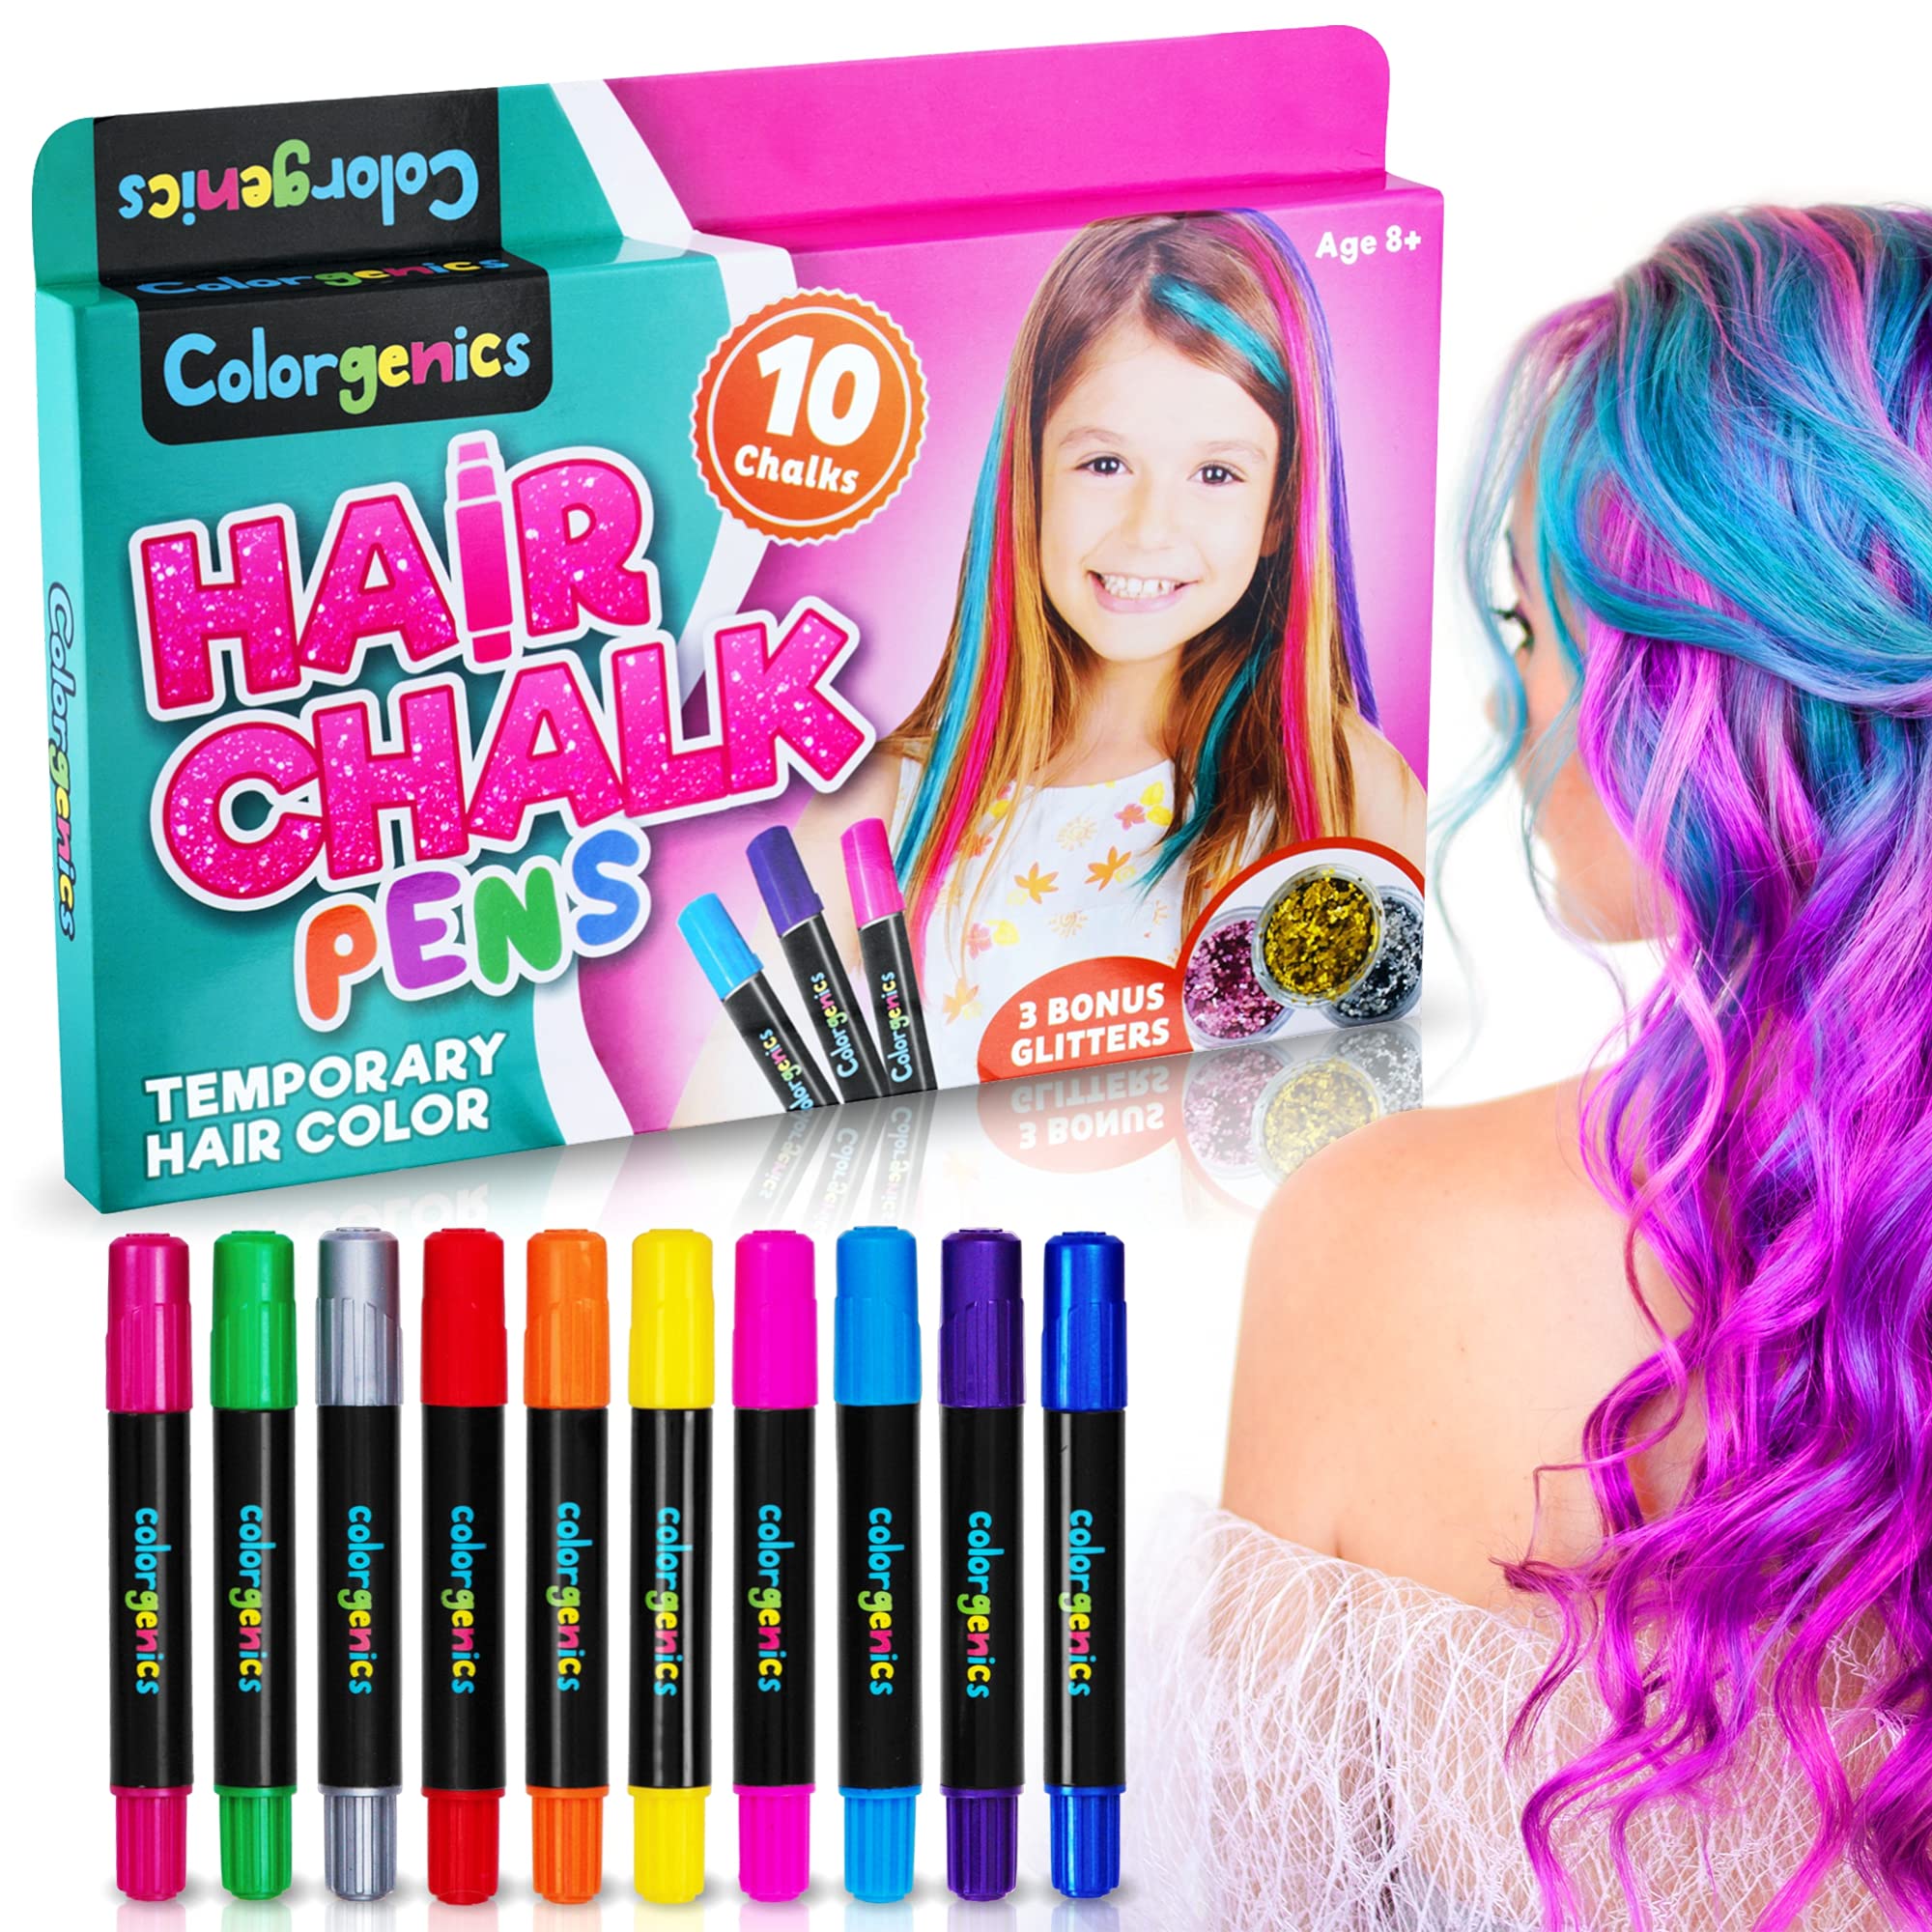 Mua Colorgenics Hair Chalk for Girls, Temporary Hair Chalk for Kids, 10 Color  Hair Chalk Pens and Glitters, Non Toxic Washable Temporary Hair Color for  Kids, Hair Dye for Kids, Birthday Gifts